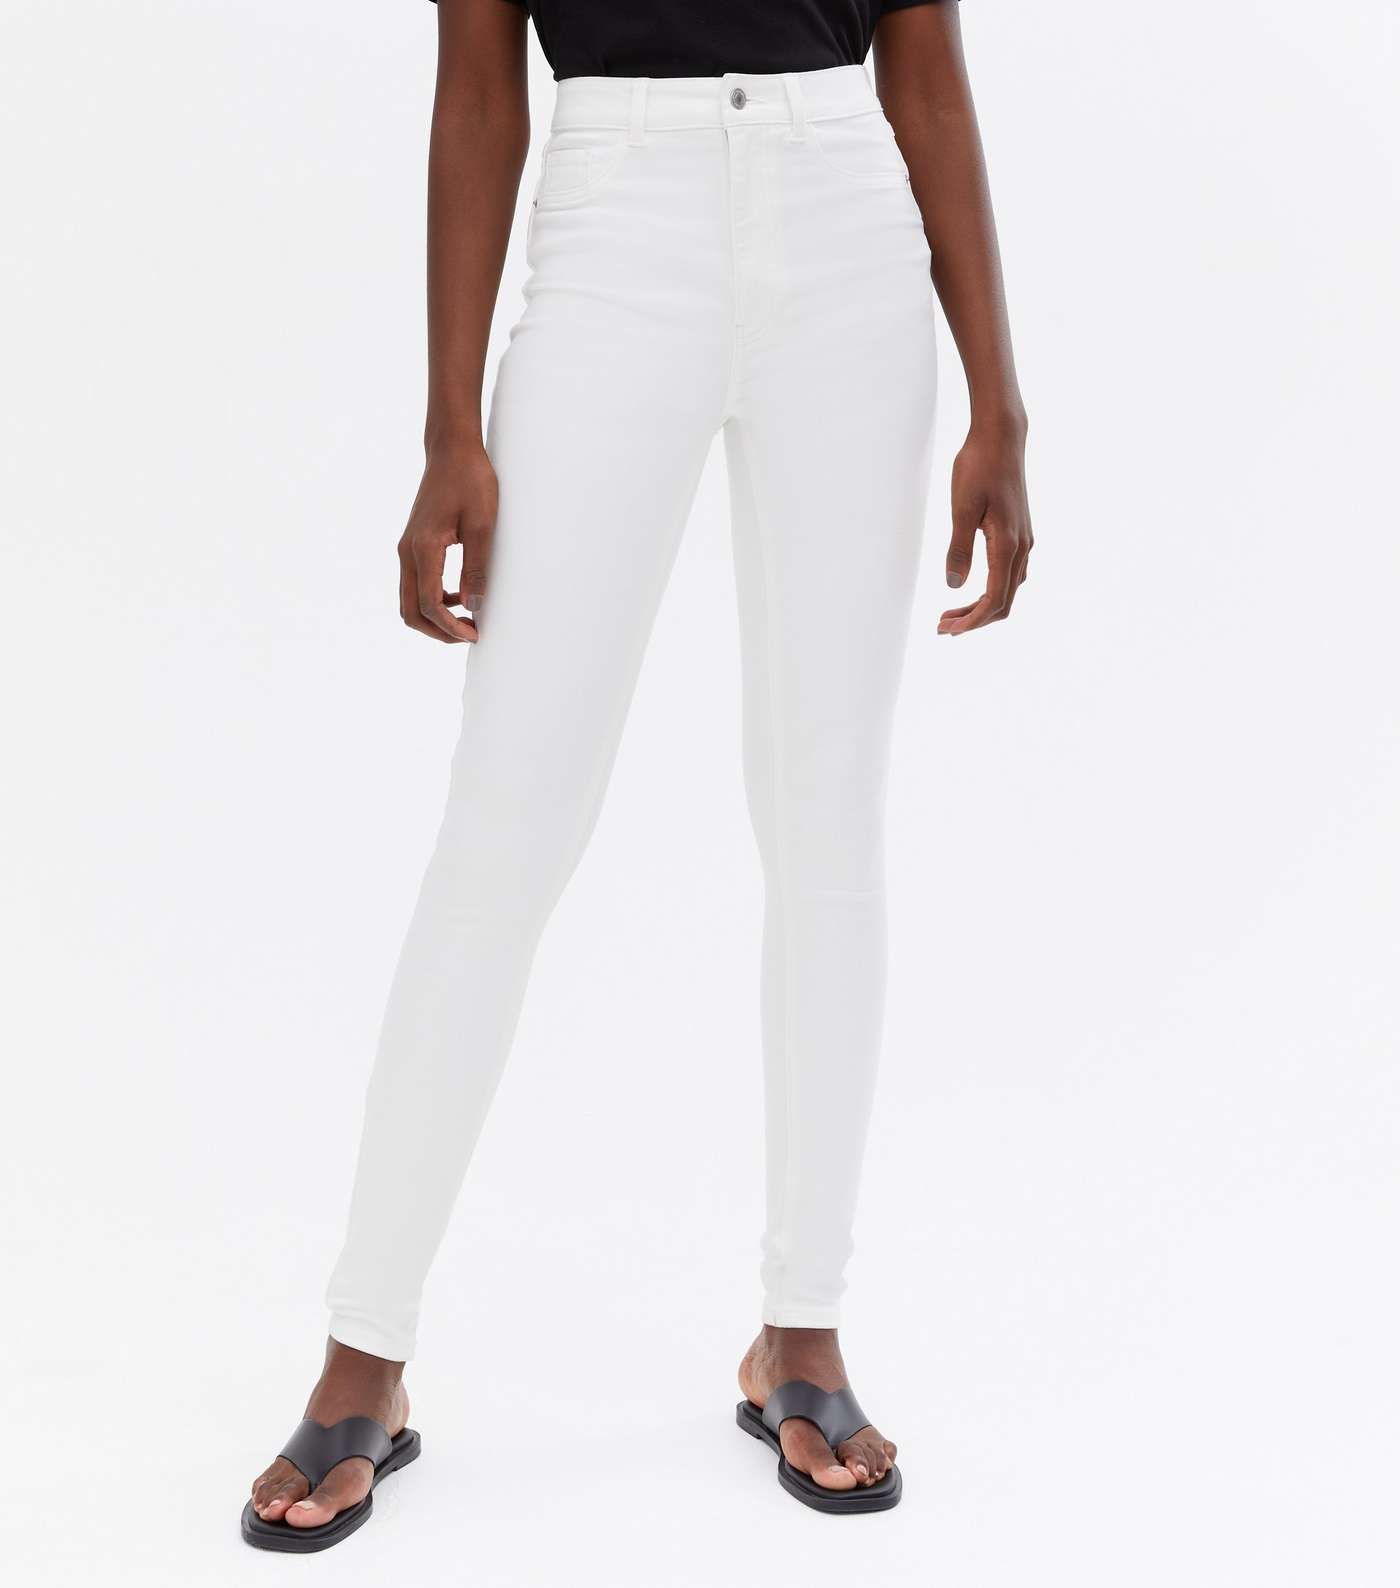 Tall White Lift & Shape Jenna Skinny Jeans Image 2